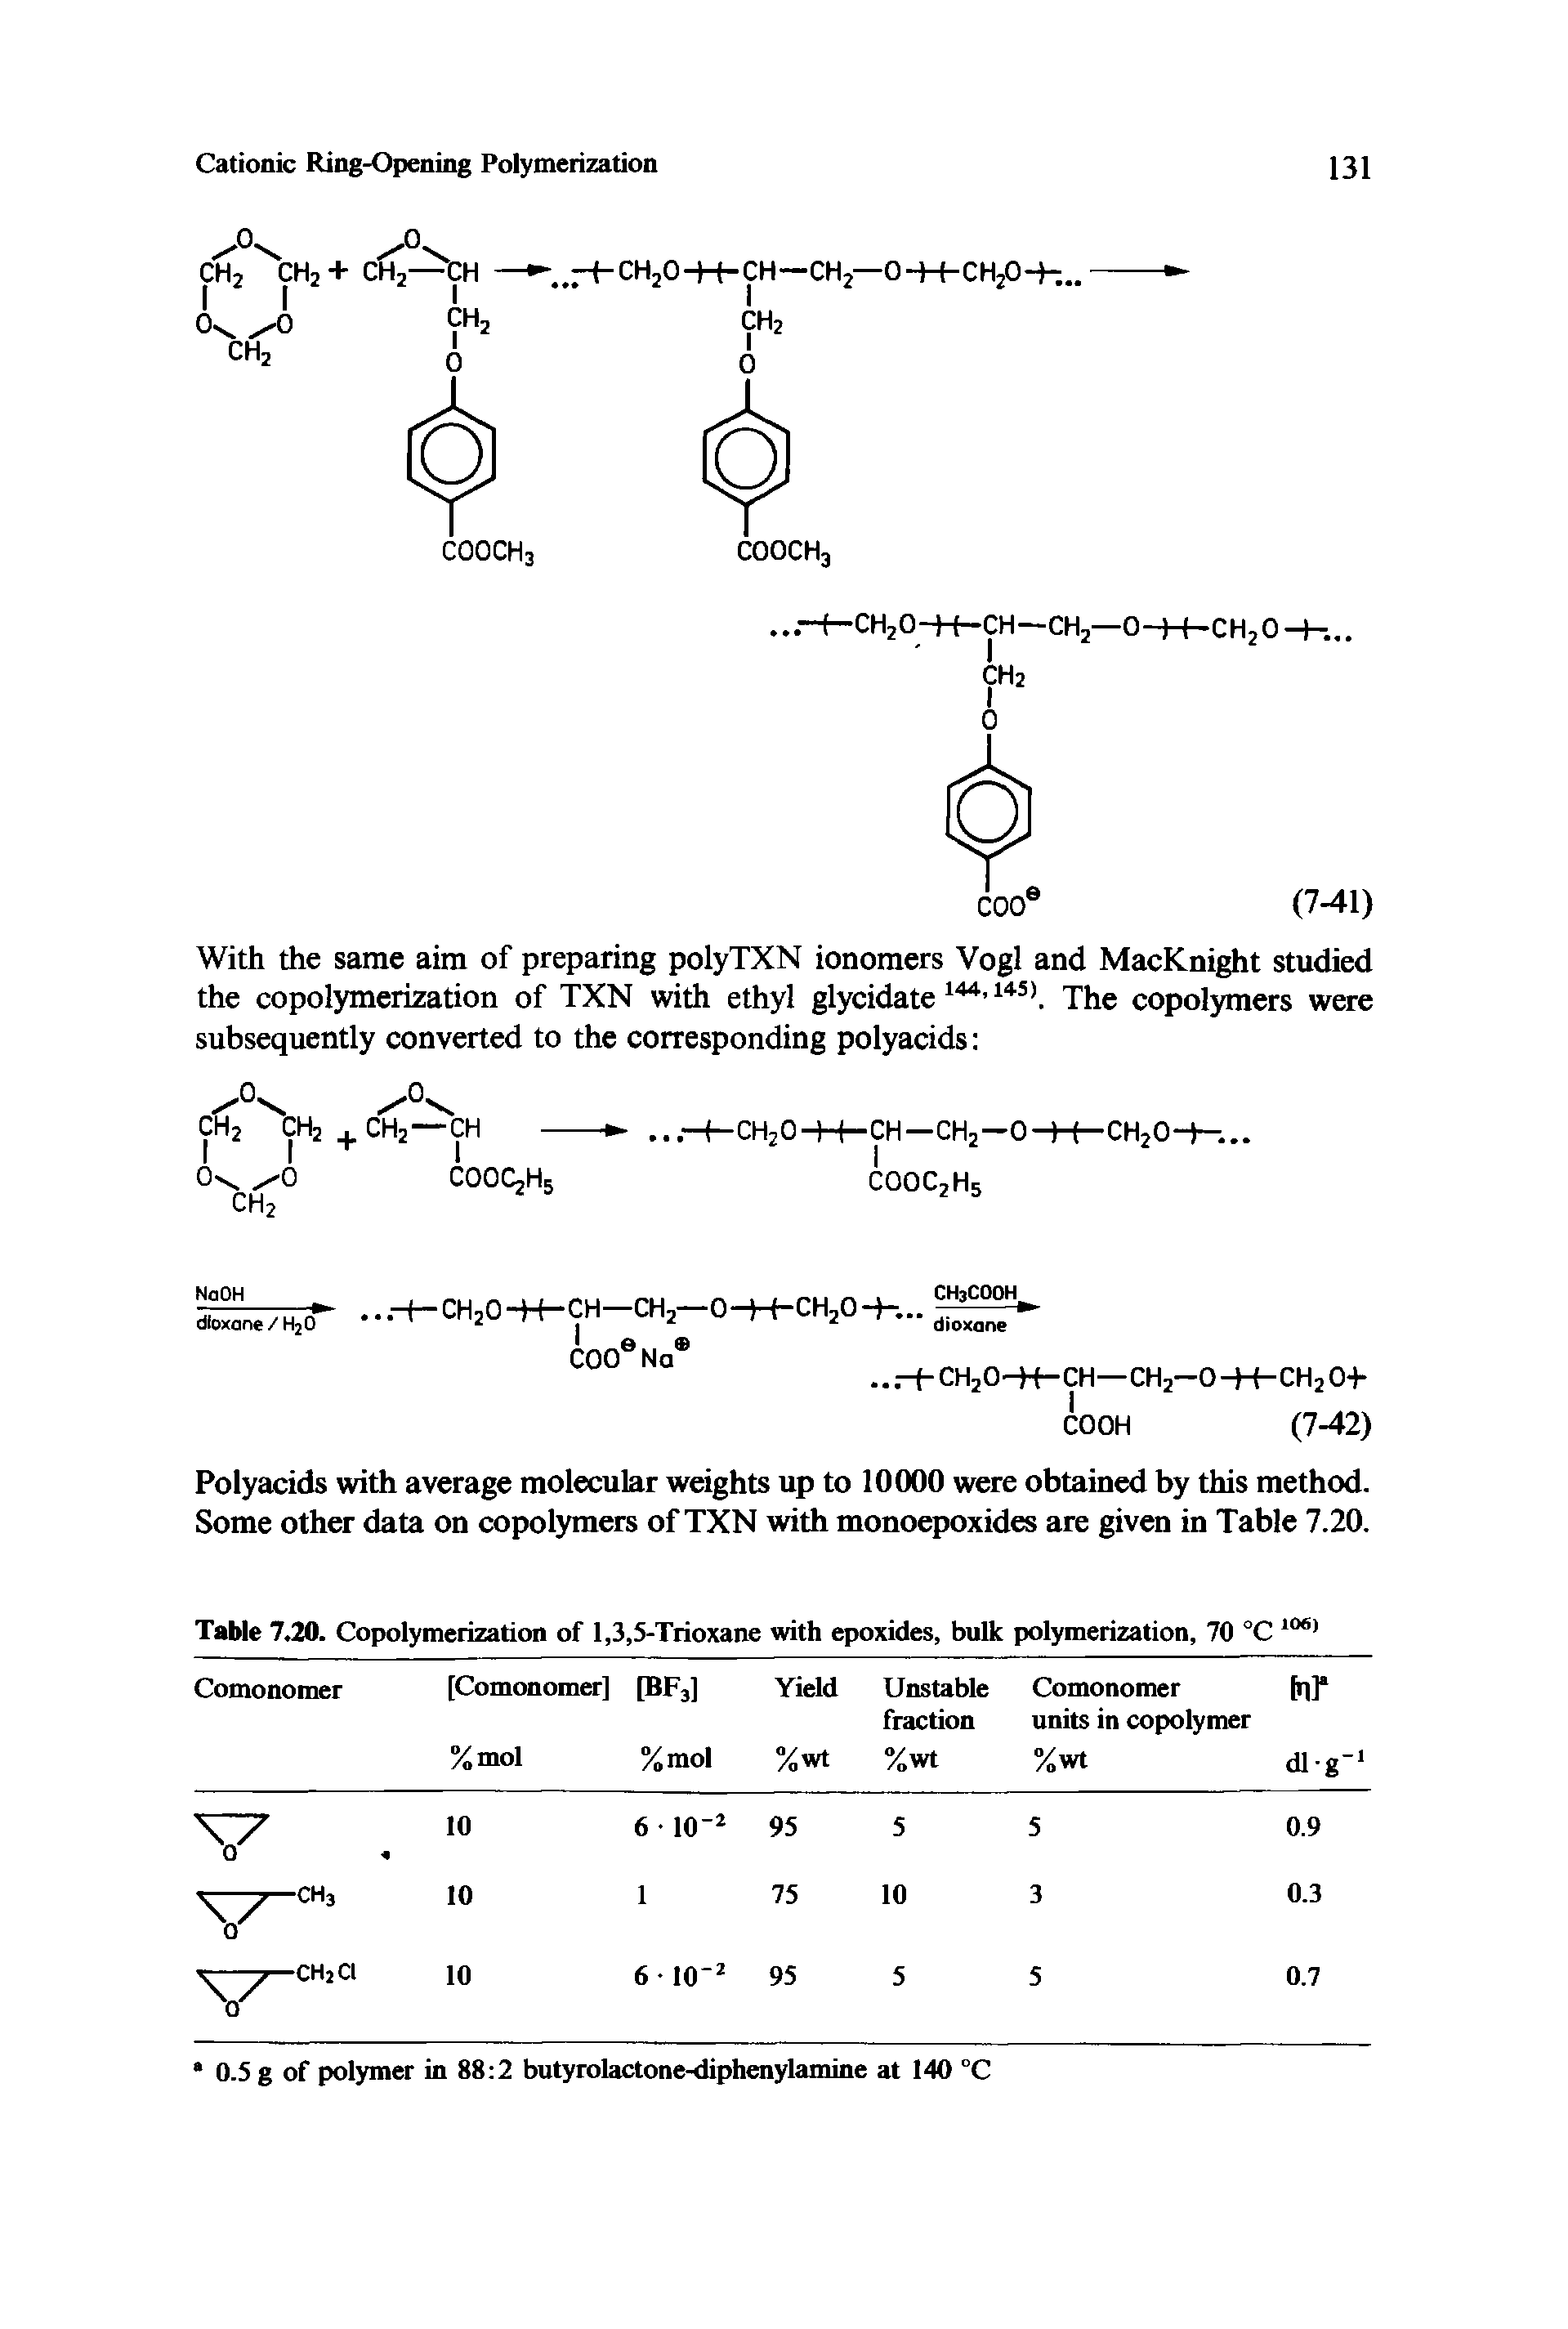 Table 7.20. Copolymerization of 1,3,5-Trioxane with epoxides, bulk polymerization, 70 °C 106)...